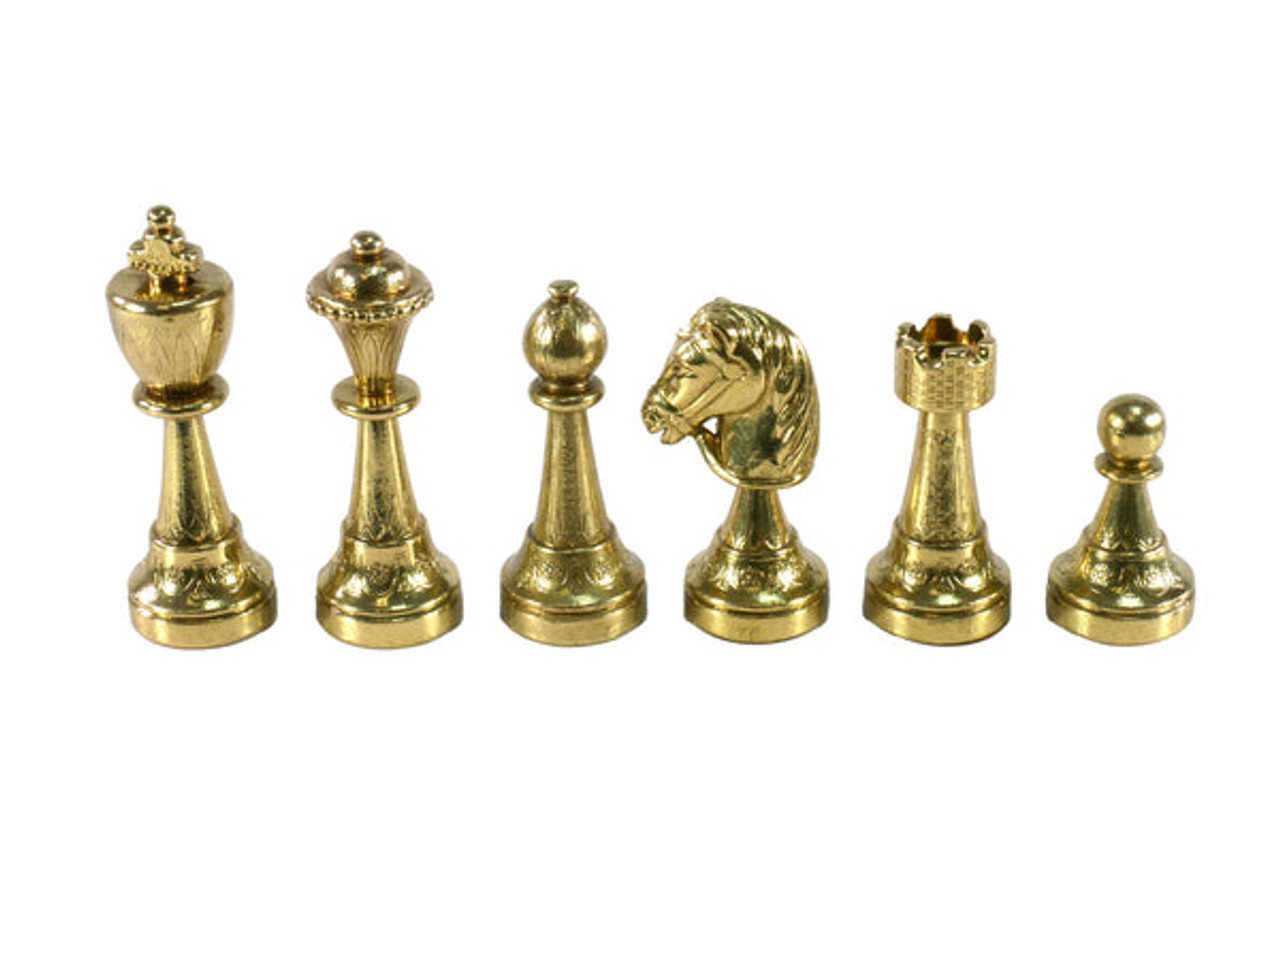 The Treviso Refinement Chess Pieces - Metal Staunton Design with 3" King white pieces